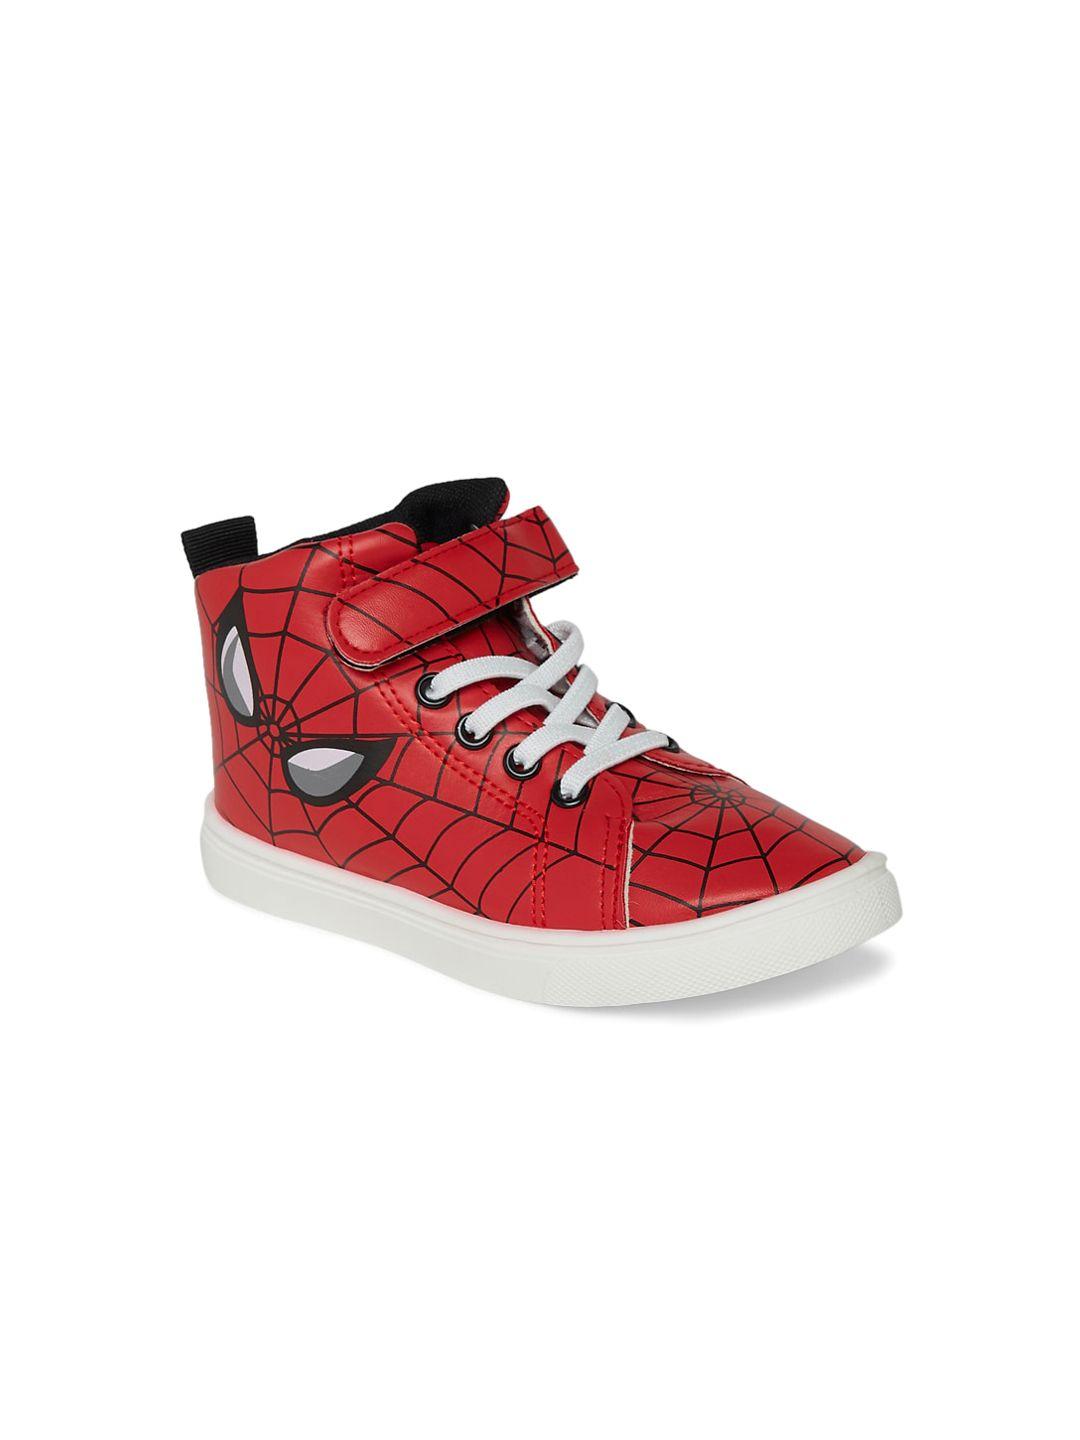 pantaloons junior boys spider-man printed pu sneakers